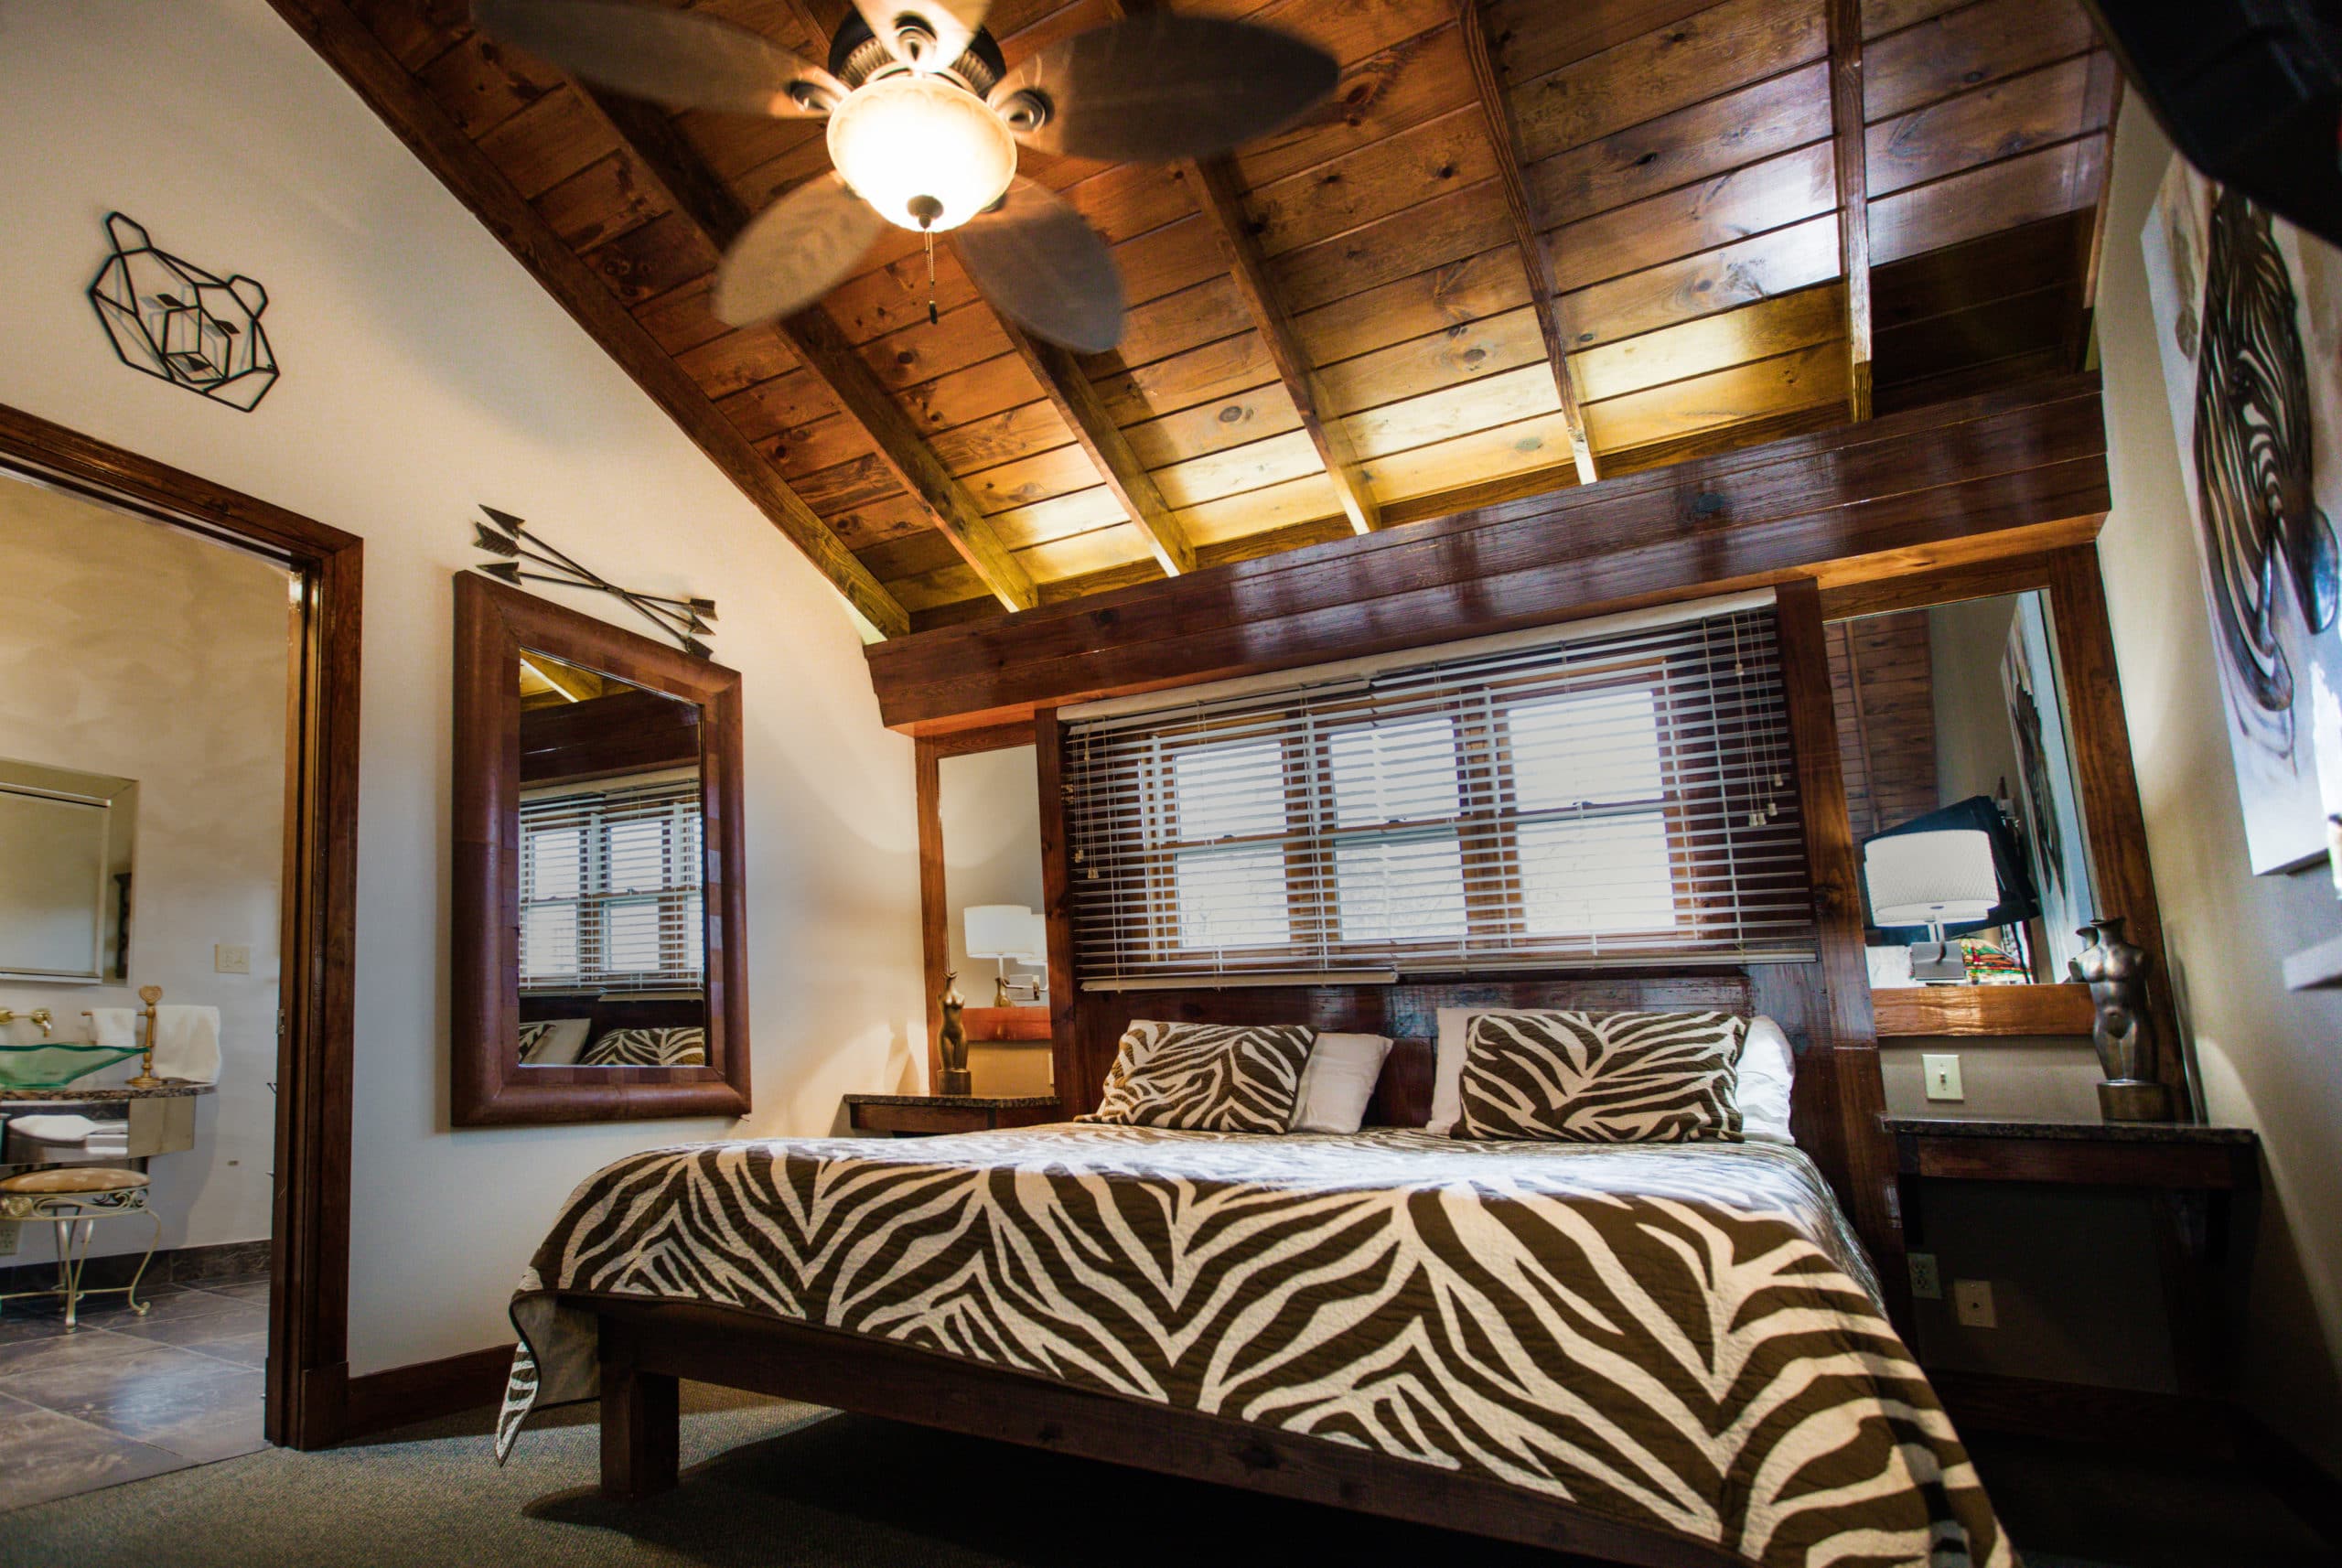 rivers-bend-cabin-04-riverside-retreat-bedroom-tree-design-blanket-wood-ceiling-scaled